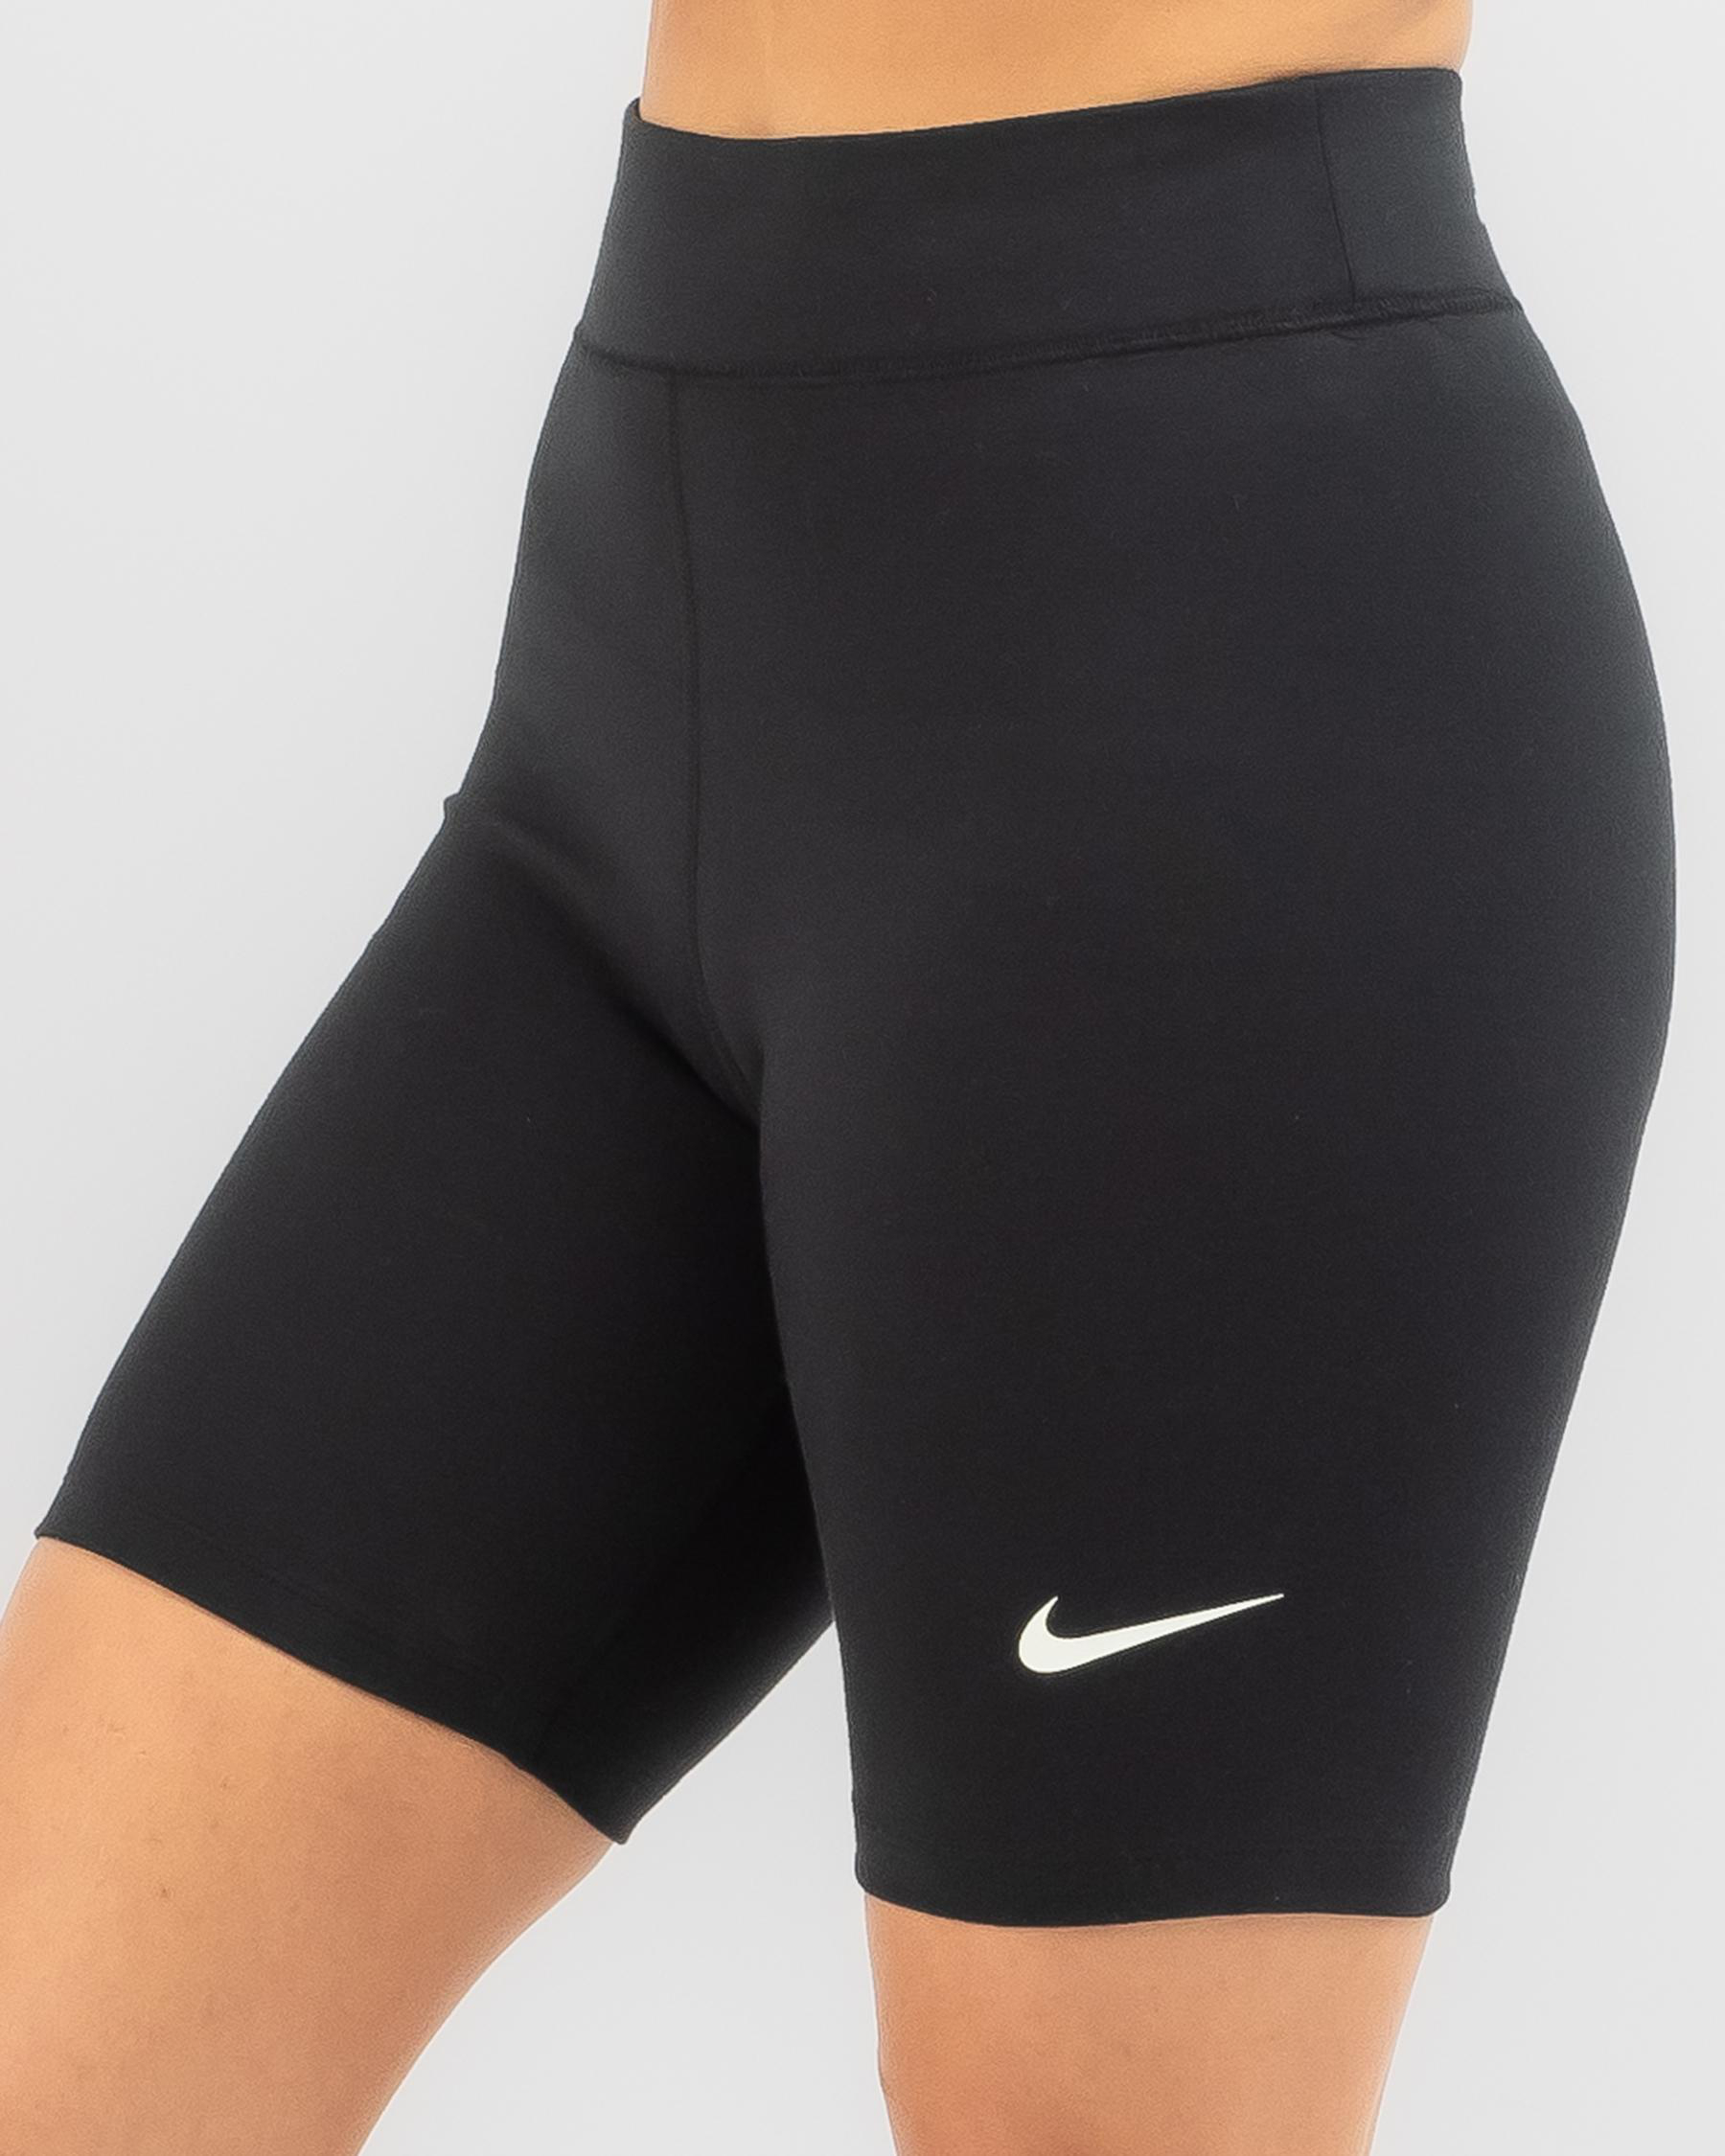 Nike Classic 8 Inch Bike Shorts In Black/sail - Fast Shipping & Easy ...